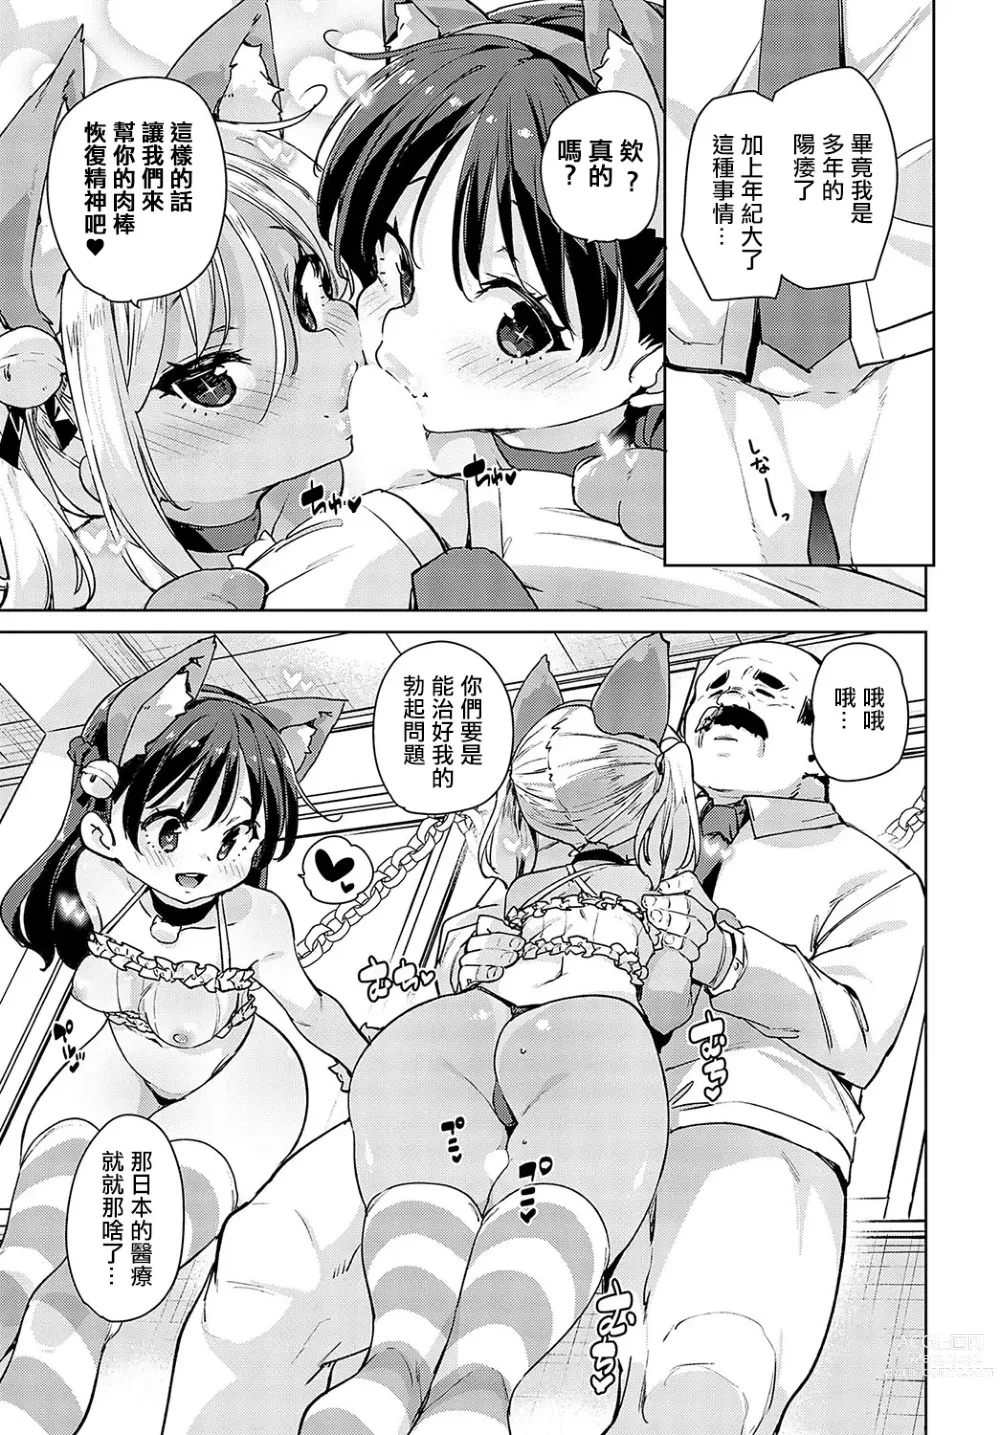 Page 7 of manga Echiechi Seichou Kiroku  6